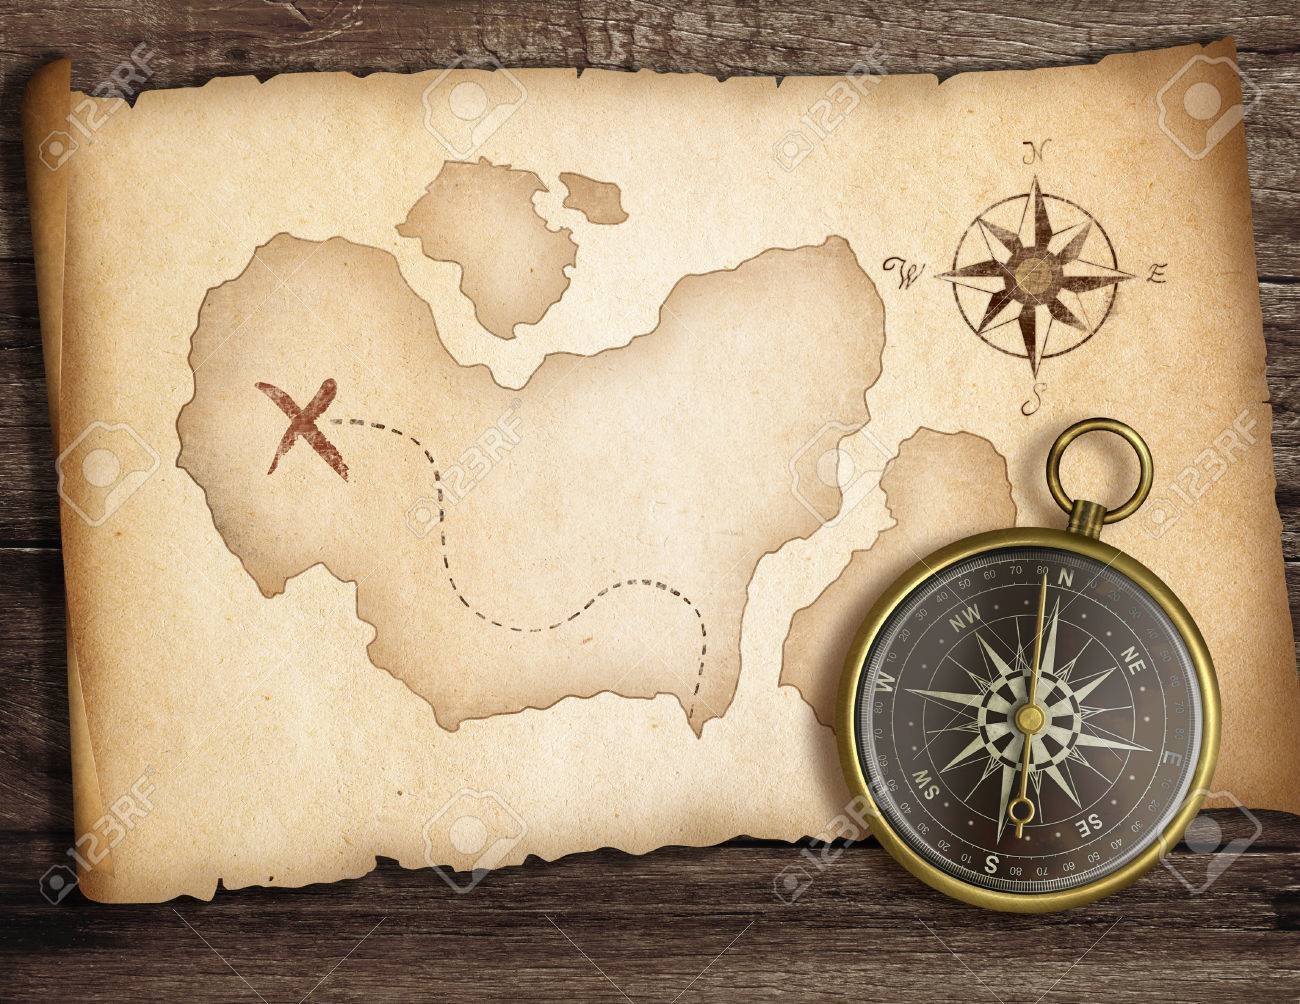 Включи компас на клад. Компас на карте. Древняя карта с компасом. Пиратская карта с компасом. Компас на карте сокровищ.